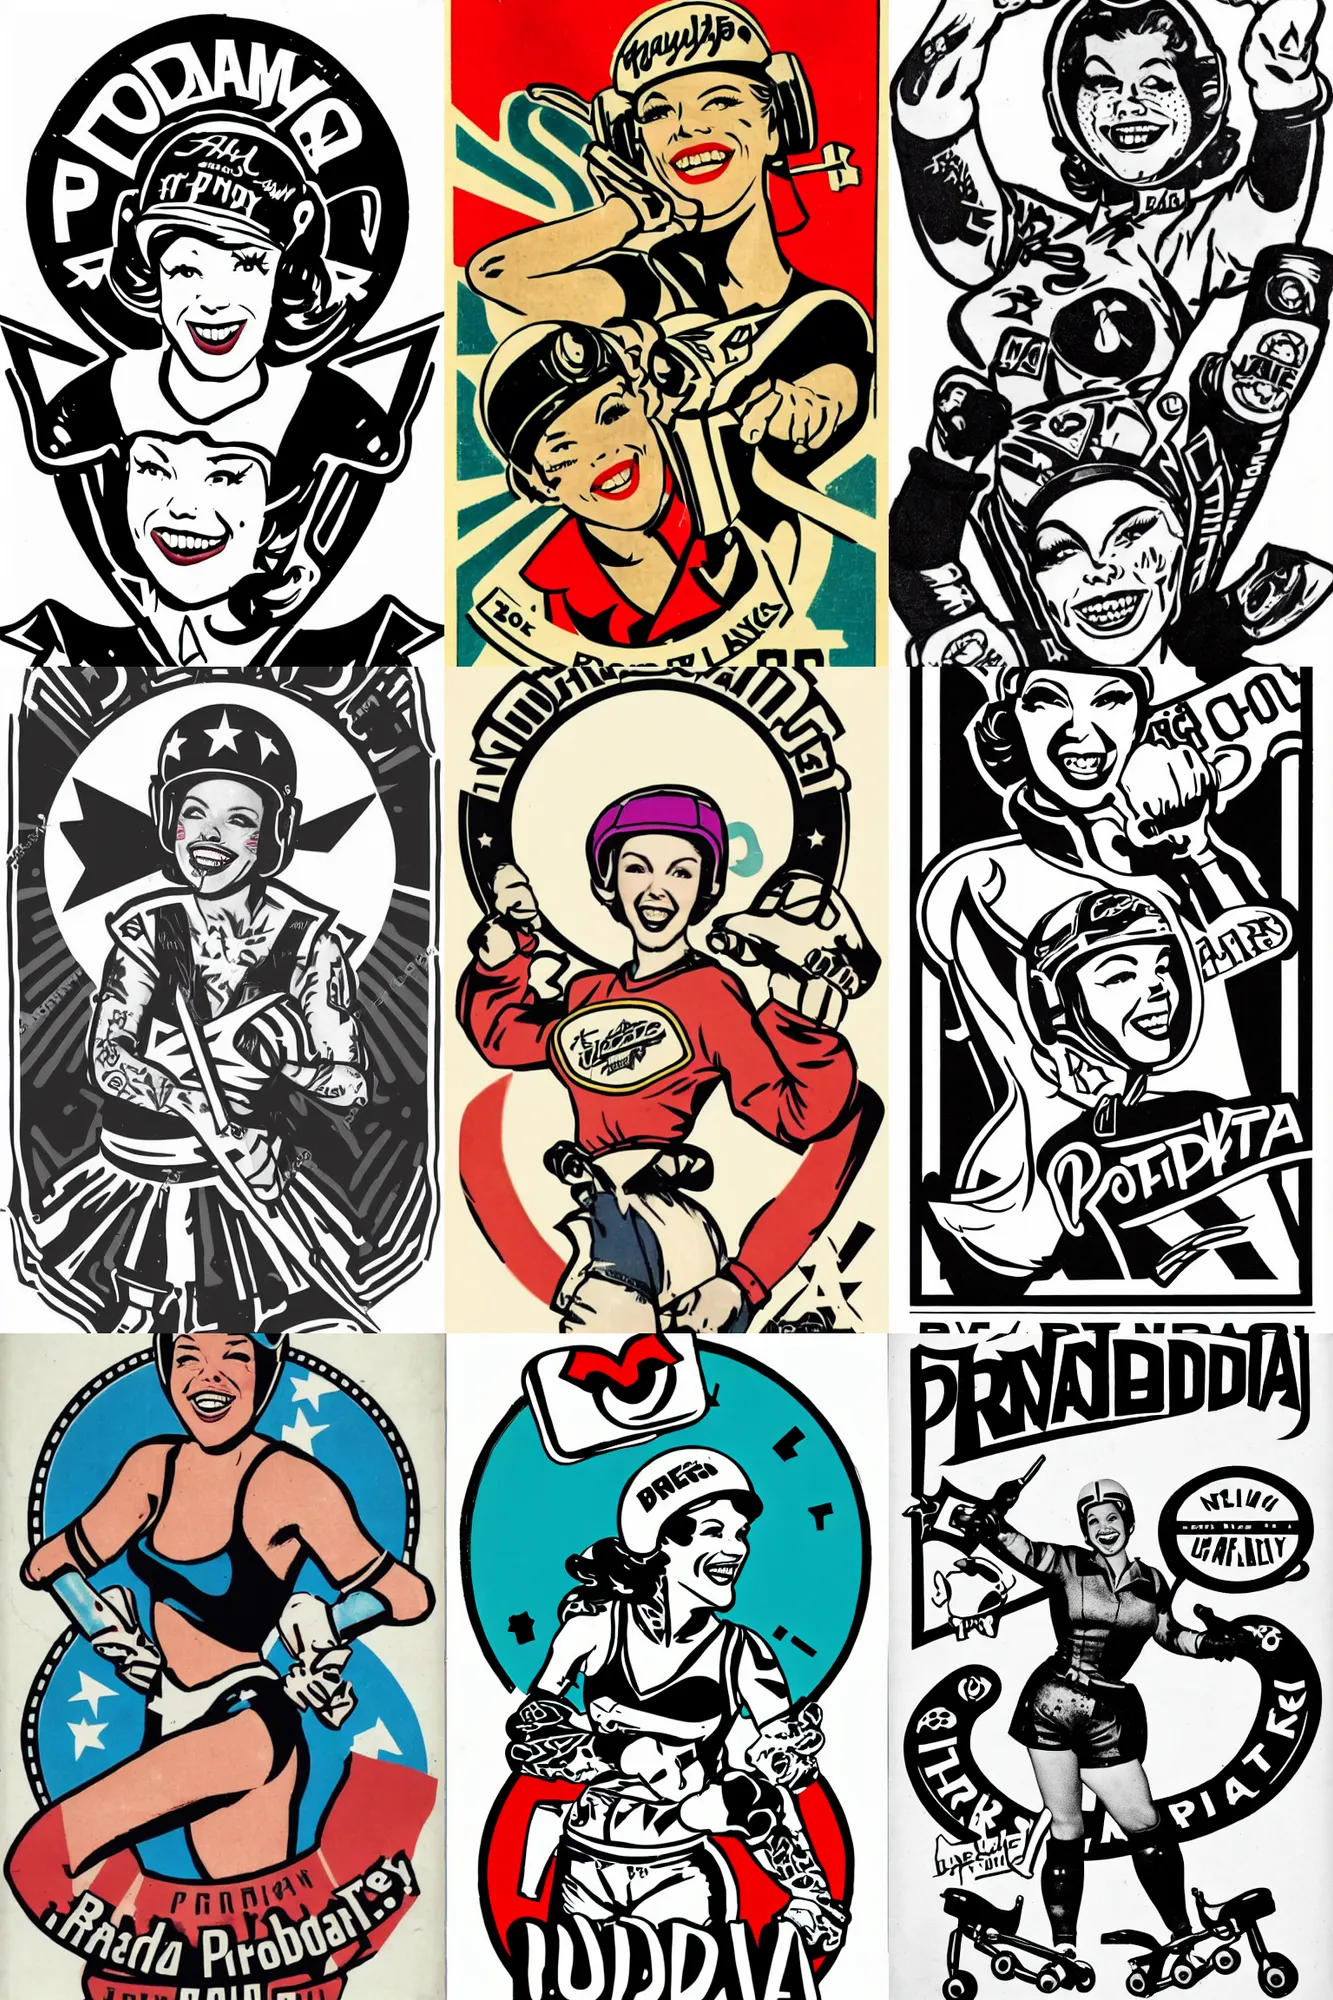 Prompt: propaganda logo, pretty roller derby girl, wearing roller derby helmet, tattoos, smile 1950s